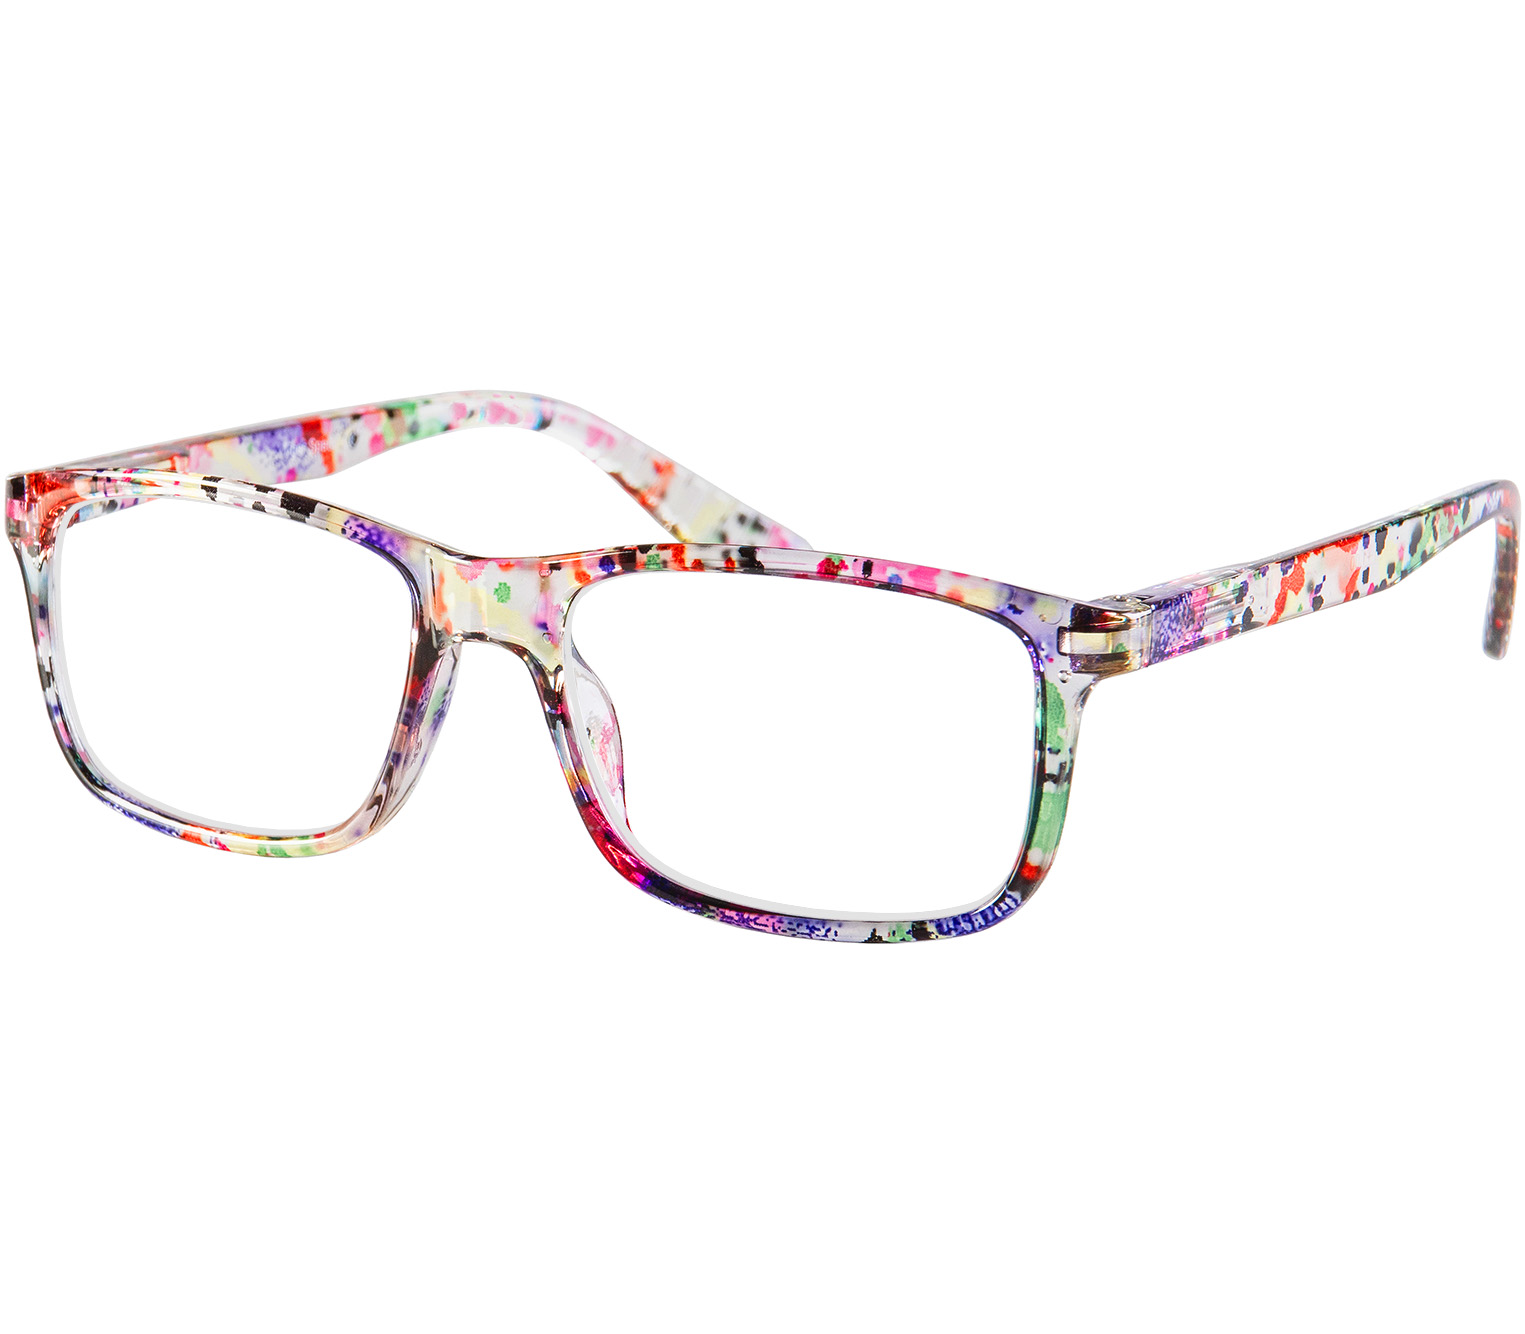 Main Image (Angle) - Dexter (Multi-coloured) Classic Reading Glasses